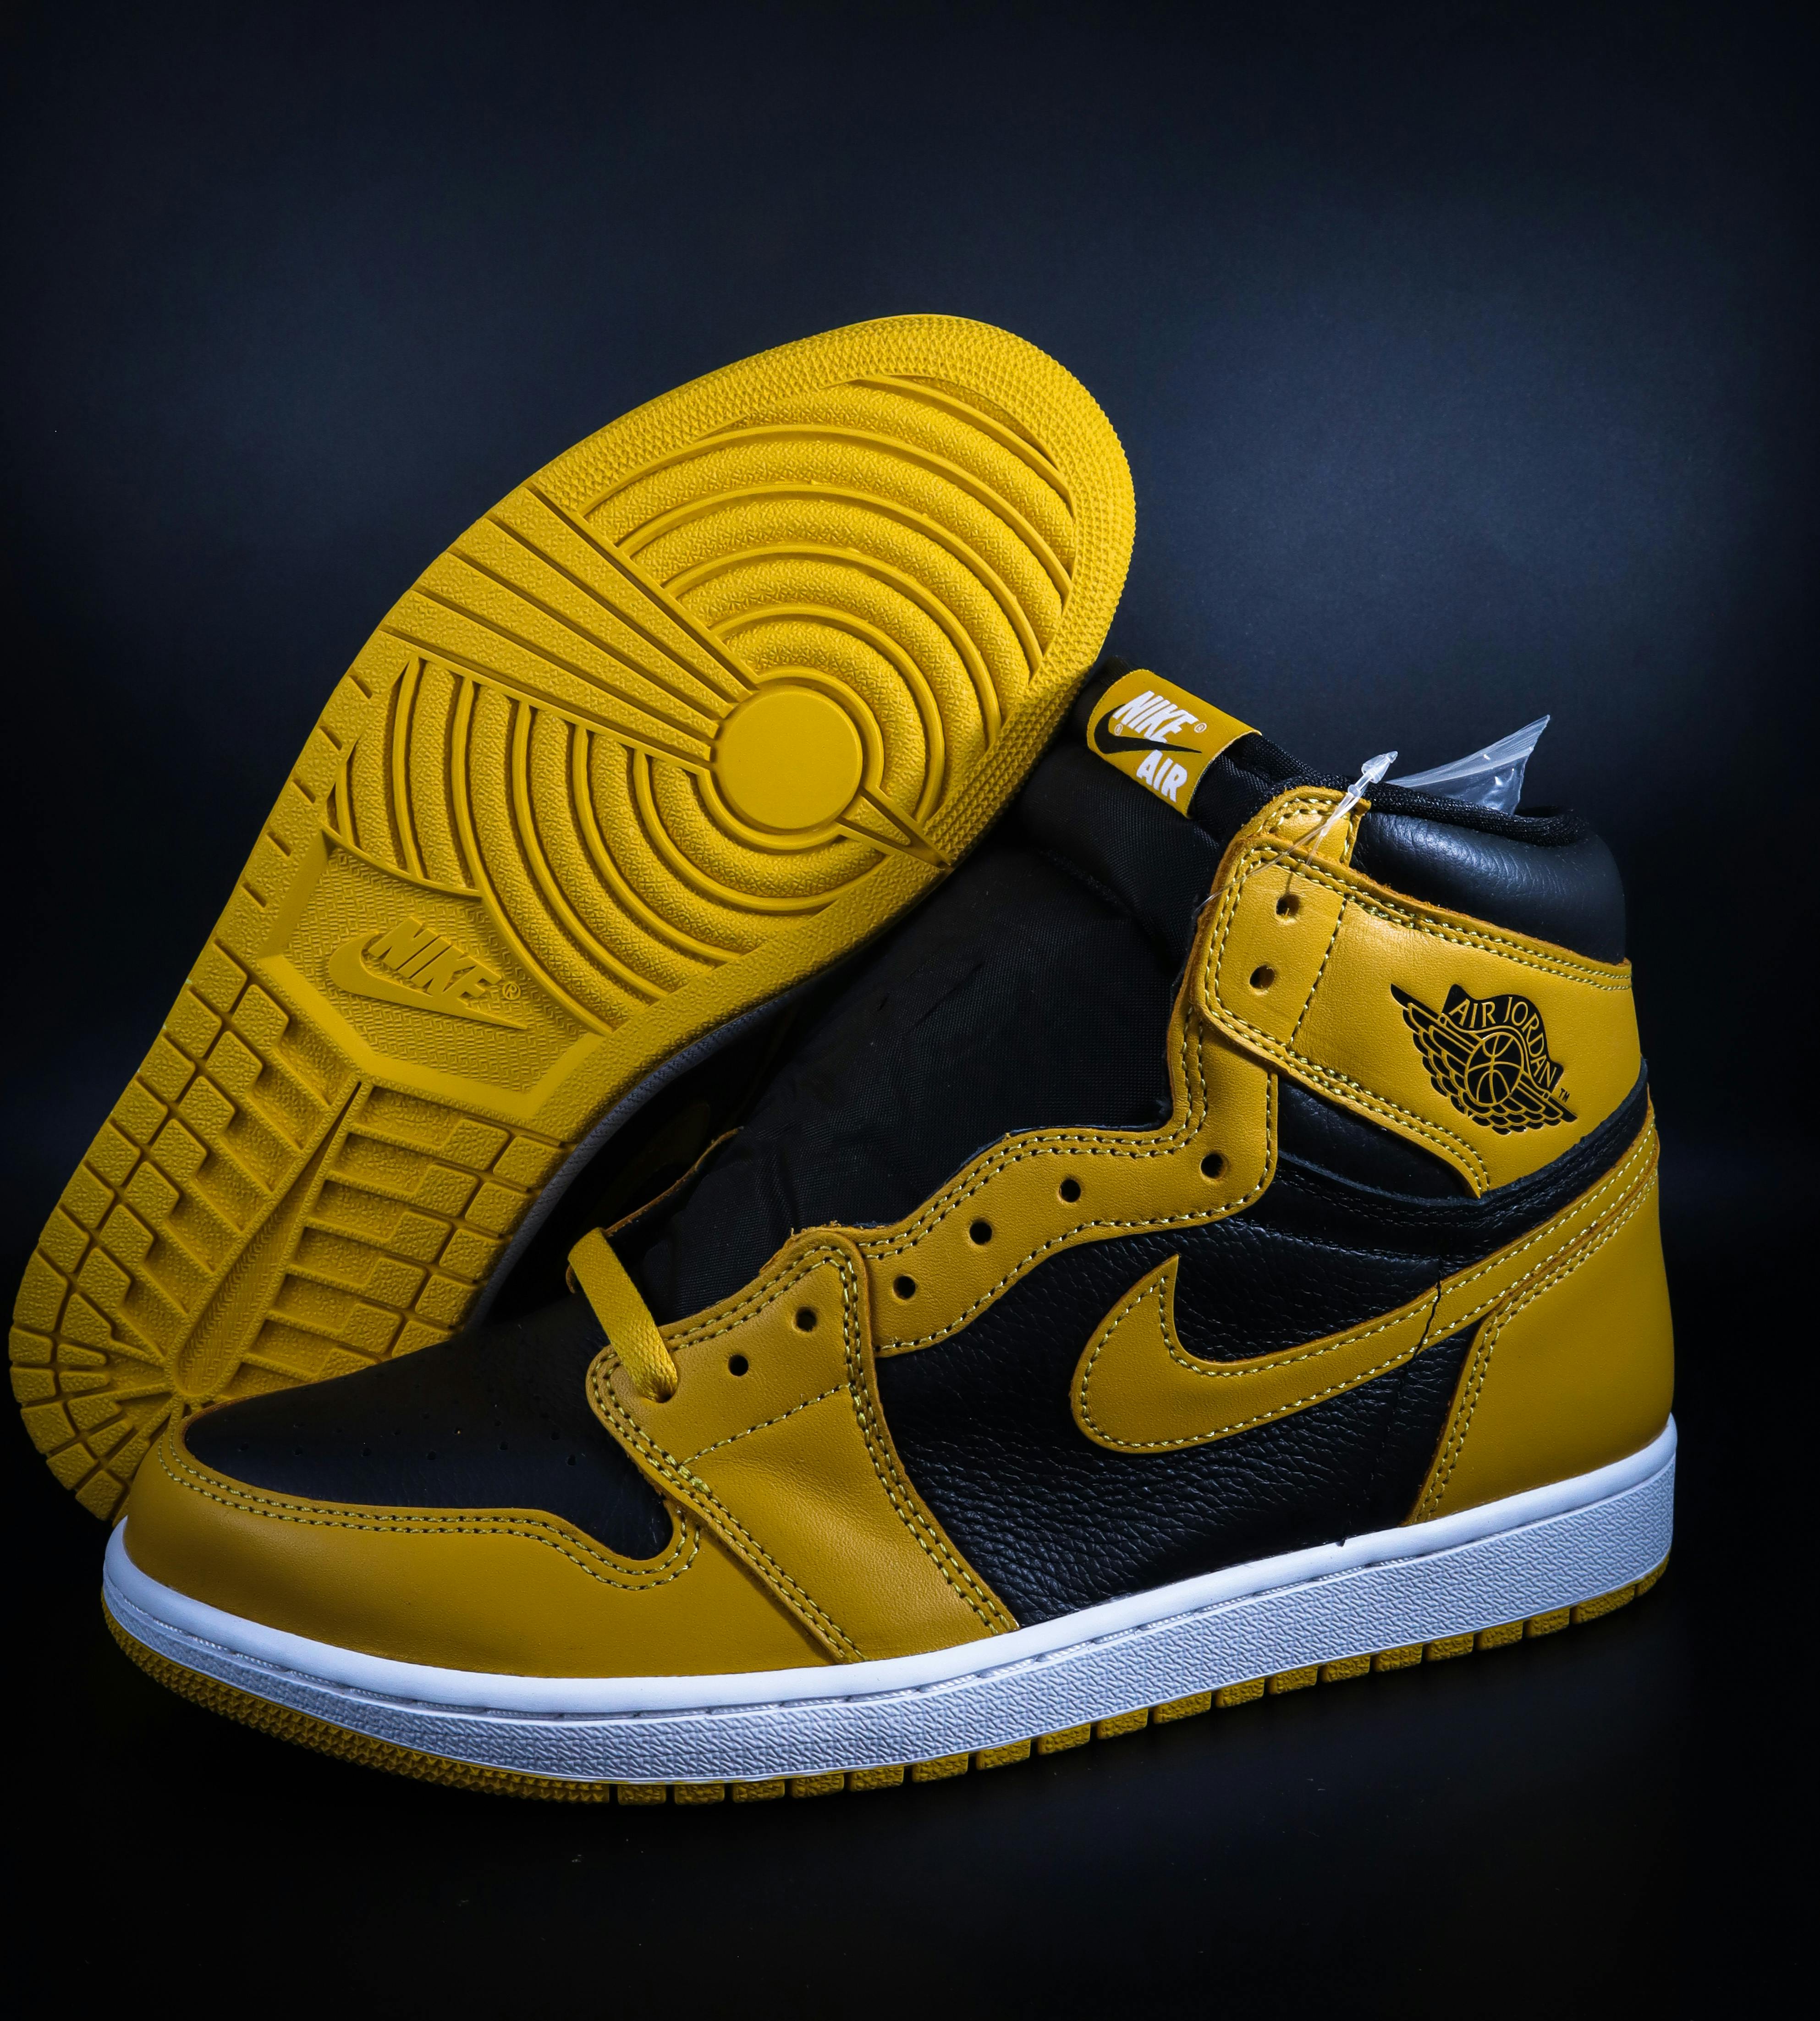 yellow nike shoes